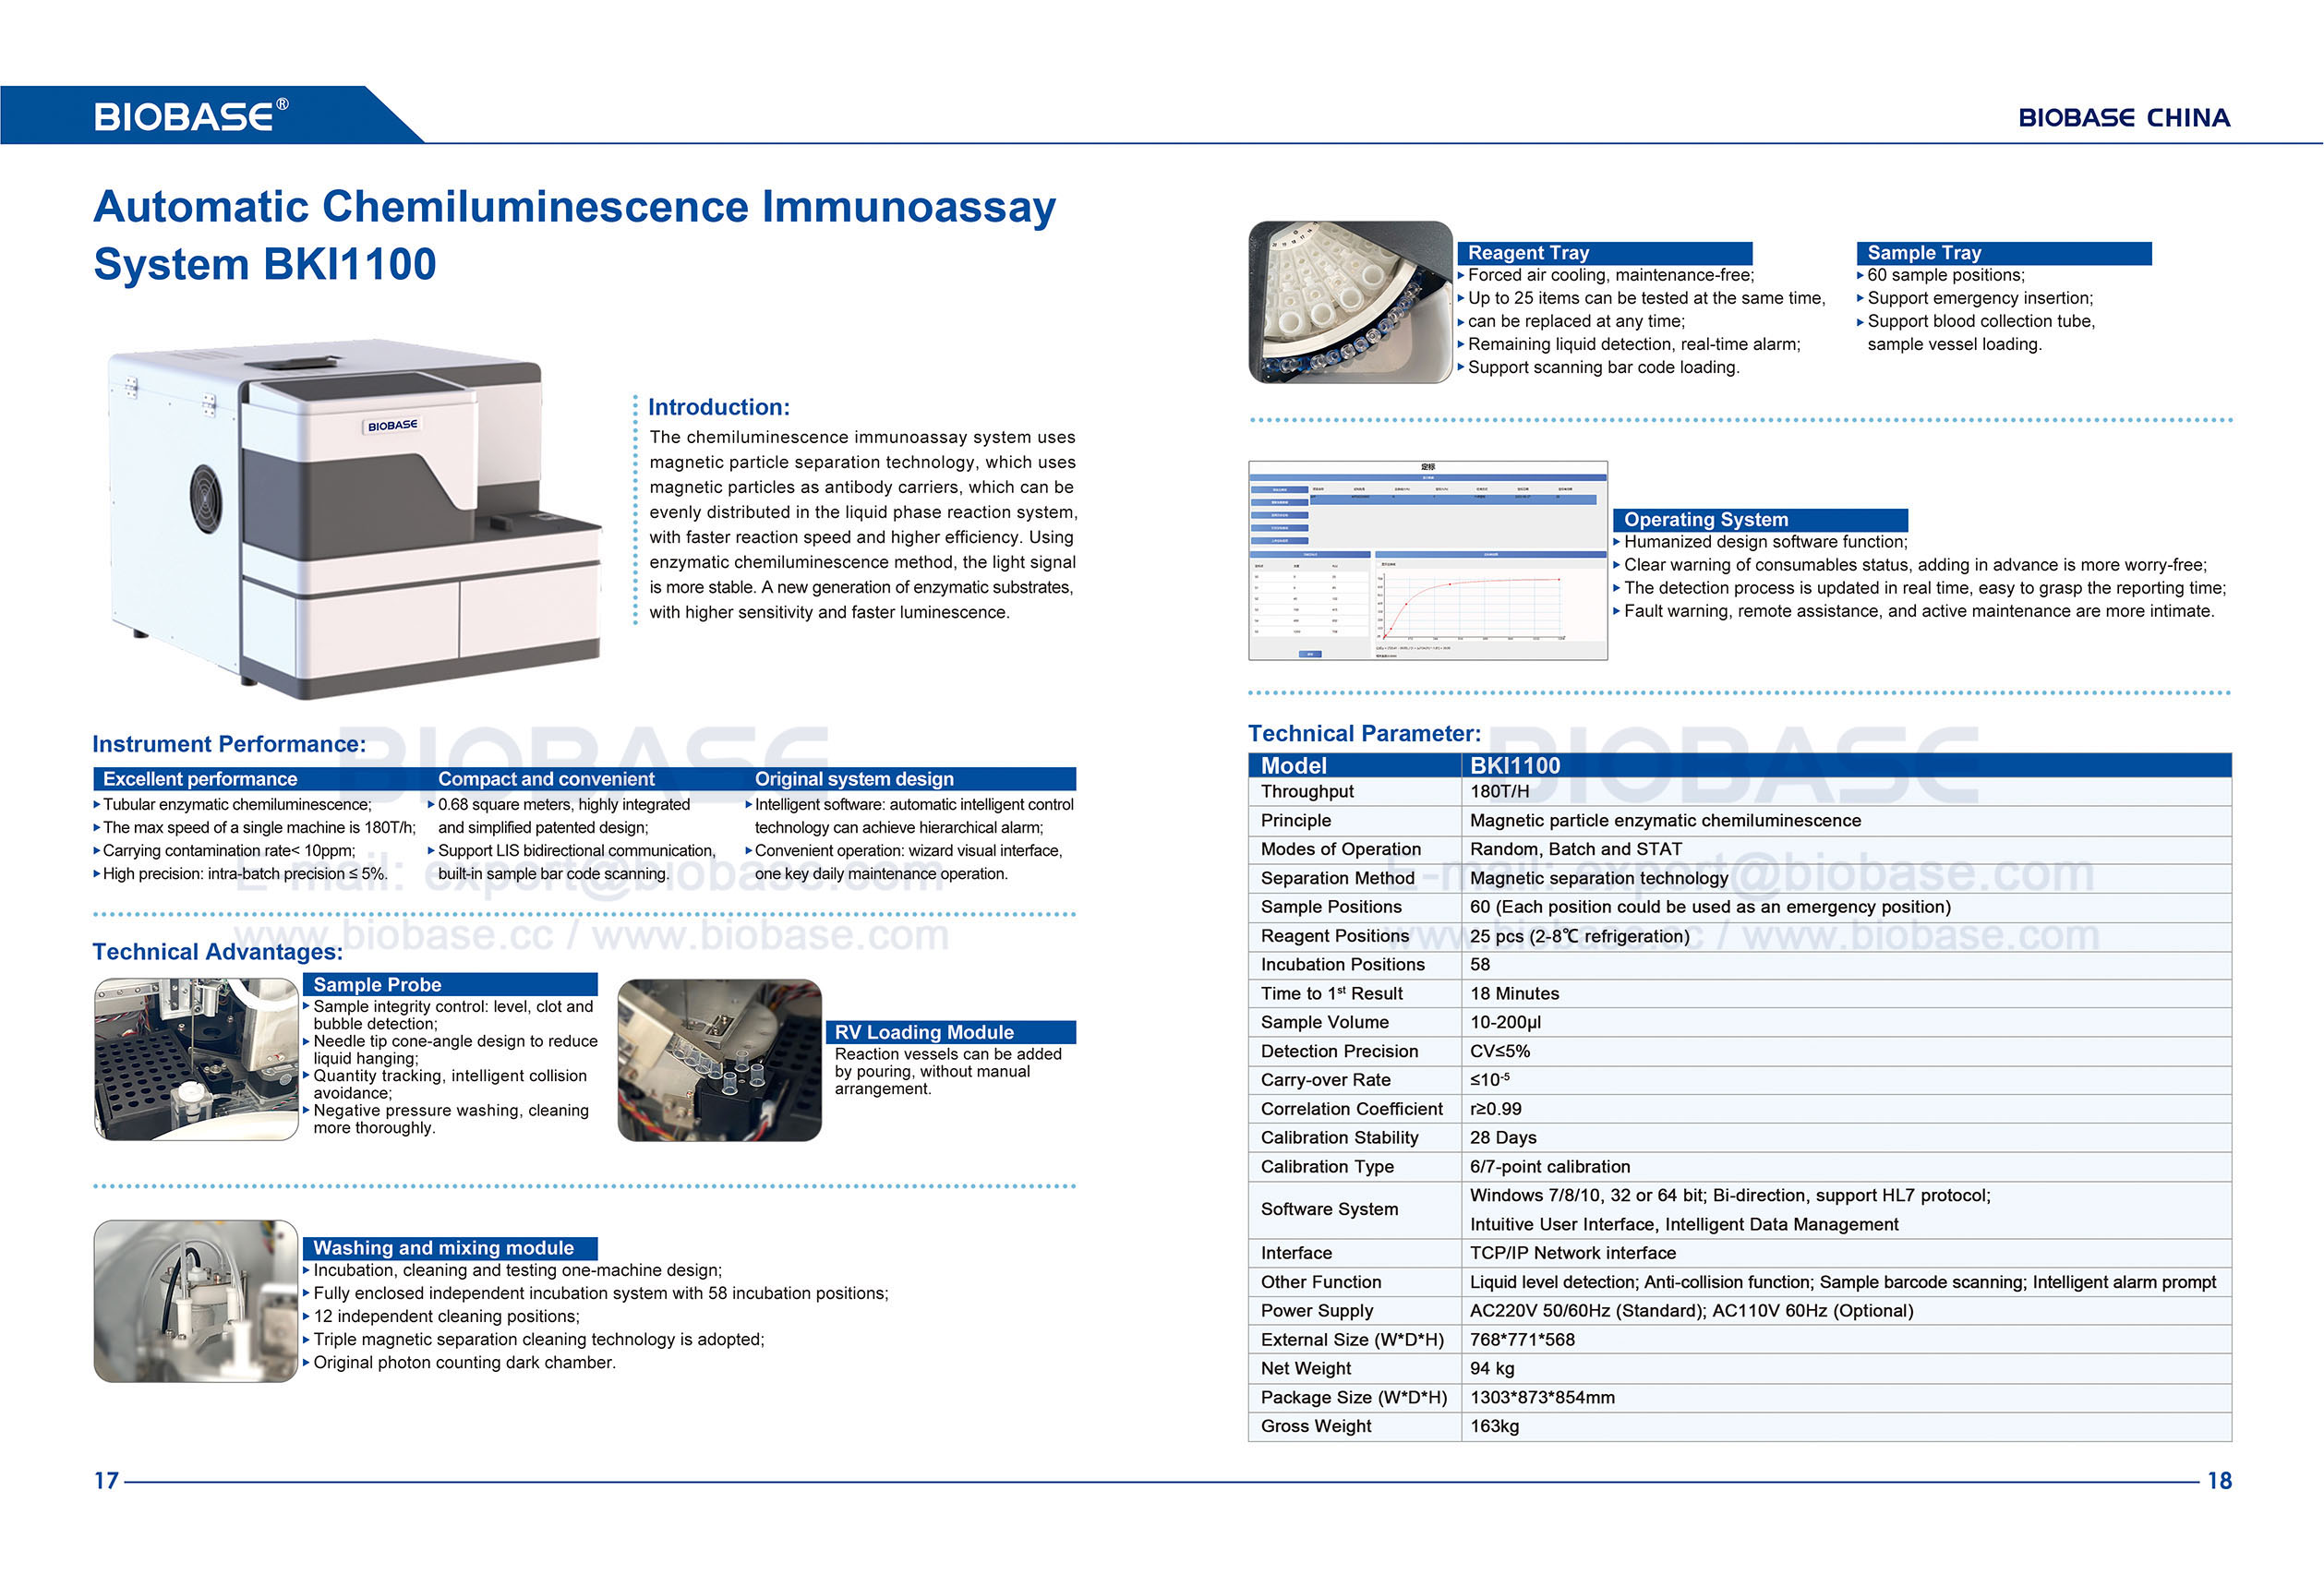 17-18 Automatic Chemiluminescence Immunoassay System BKI1100